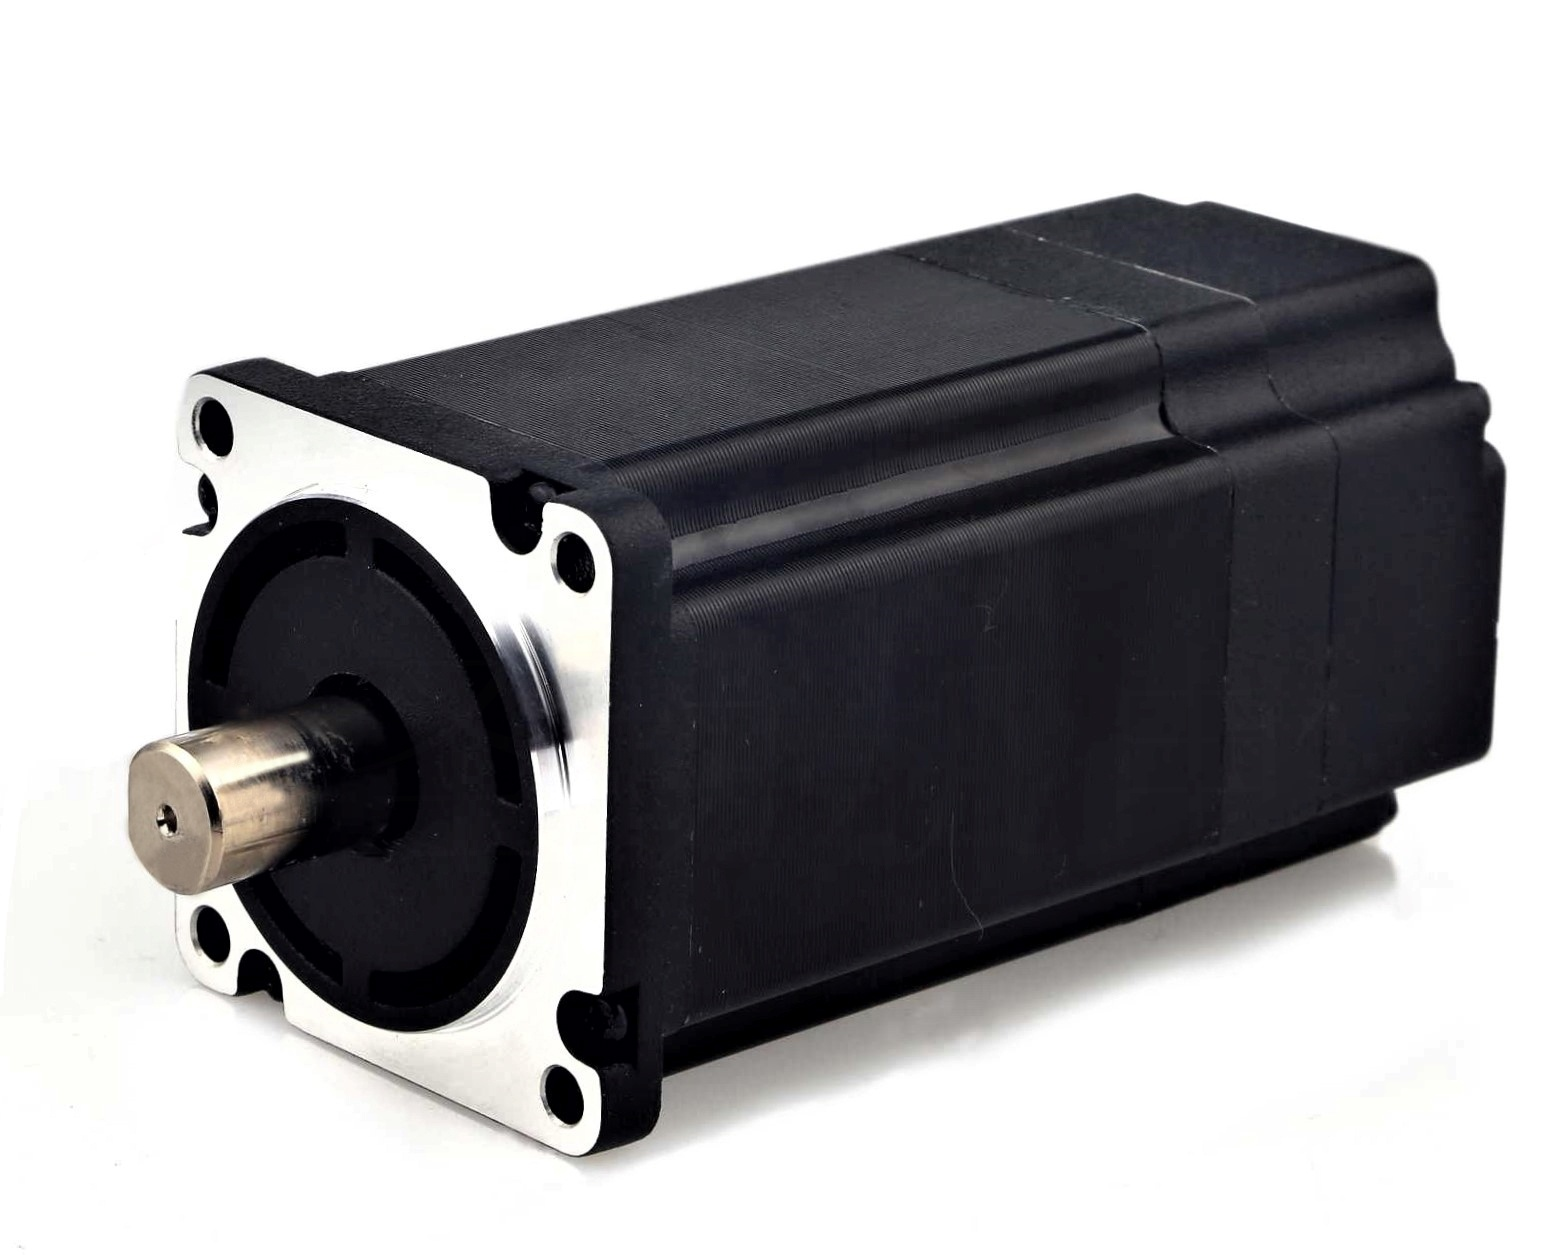 BLDC Motor Inrunner 110mm 3000rpm 3 Phase Hall Sensor 220V BLDC Motor 1000W 1260W 1570W 1880W 2200W